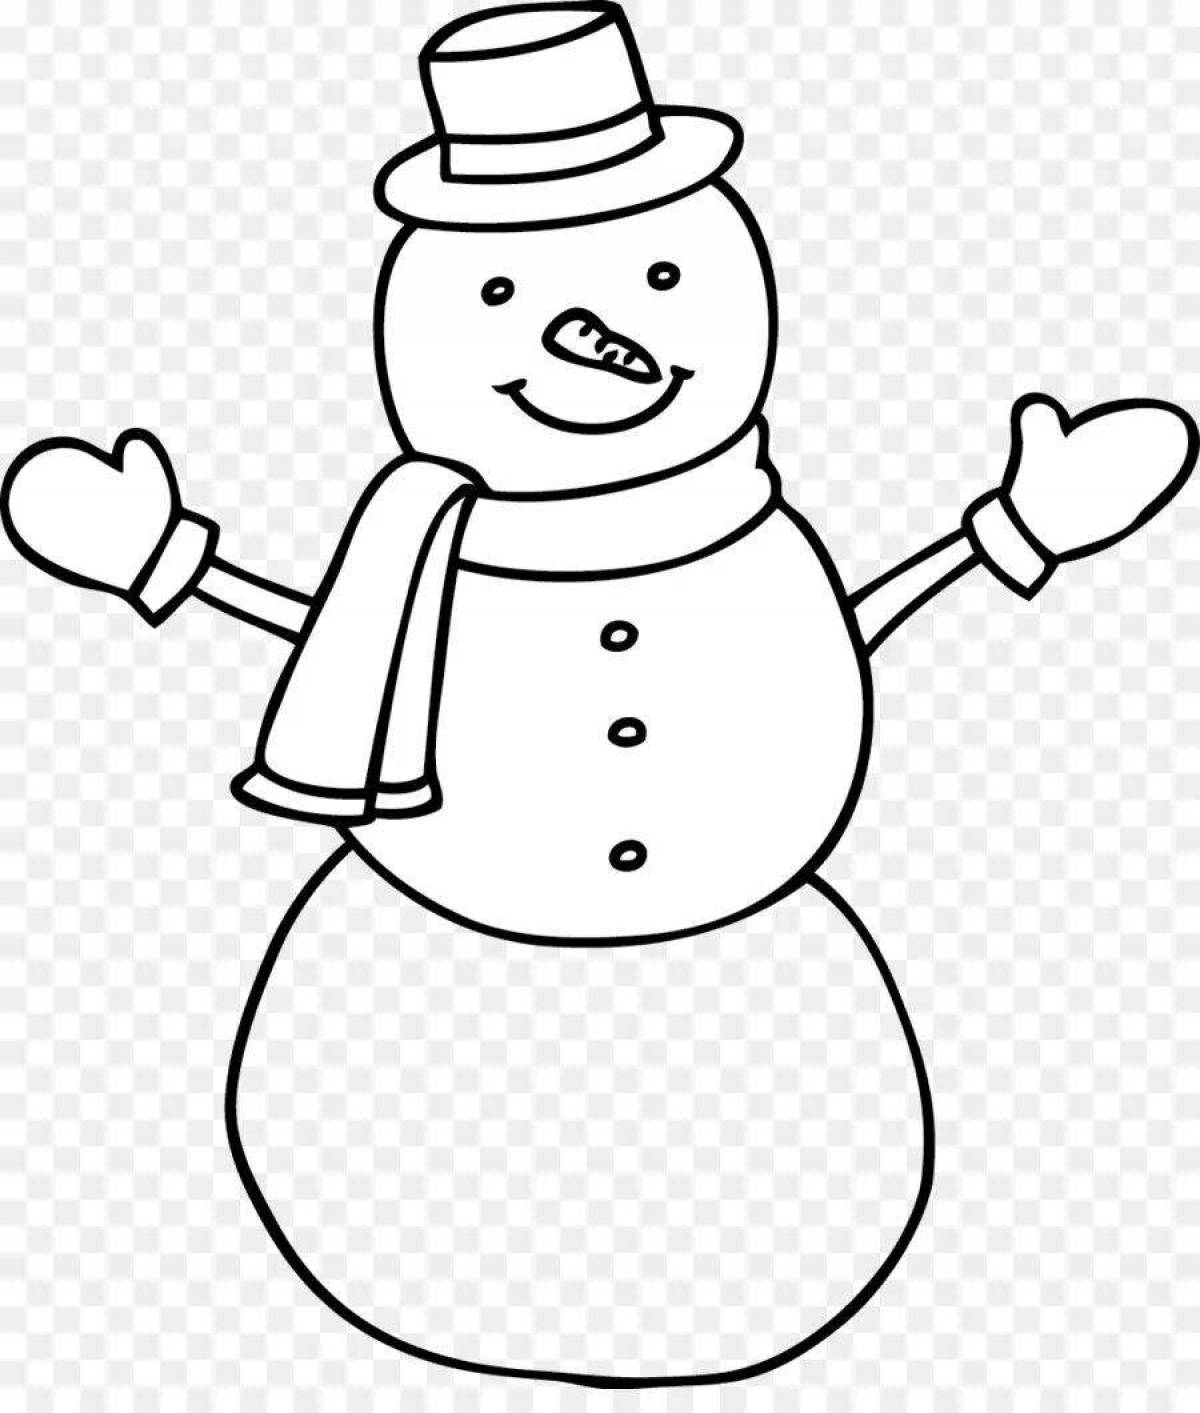 Joyful snowman coloring for kids